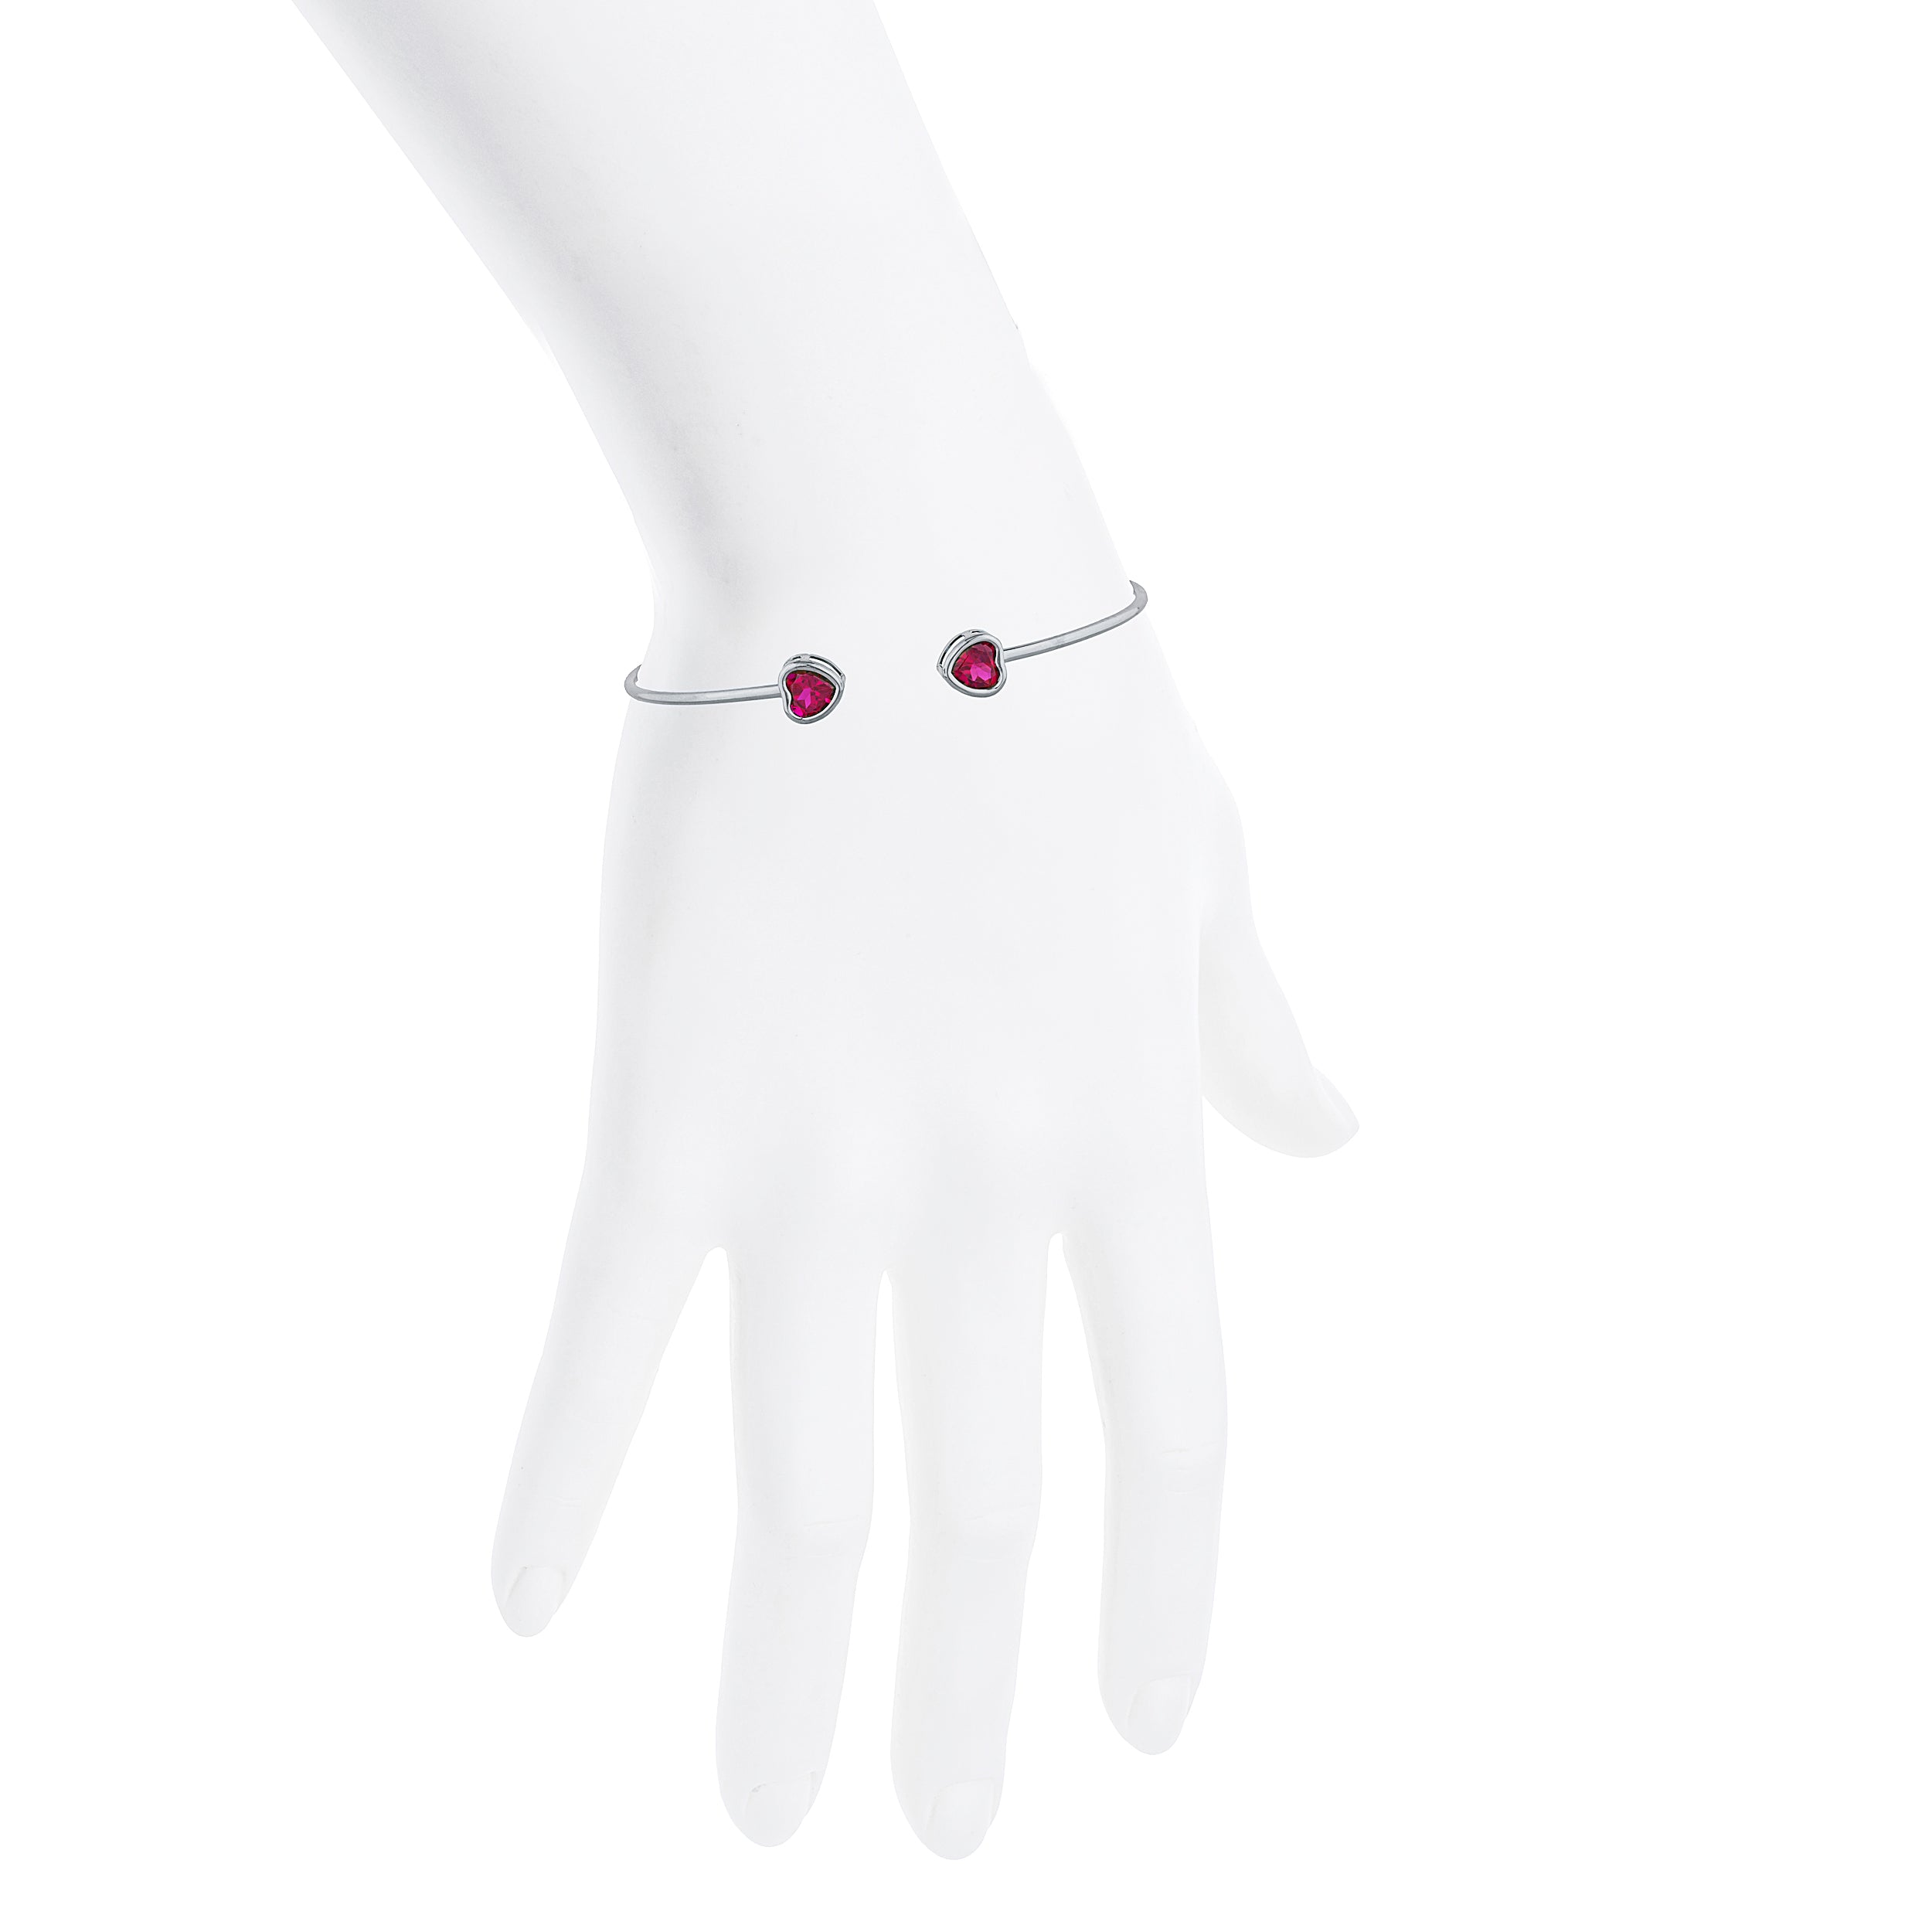 14Kt Gold Created Ruby Heart Bezel Bangle Bracelet